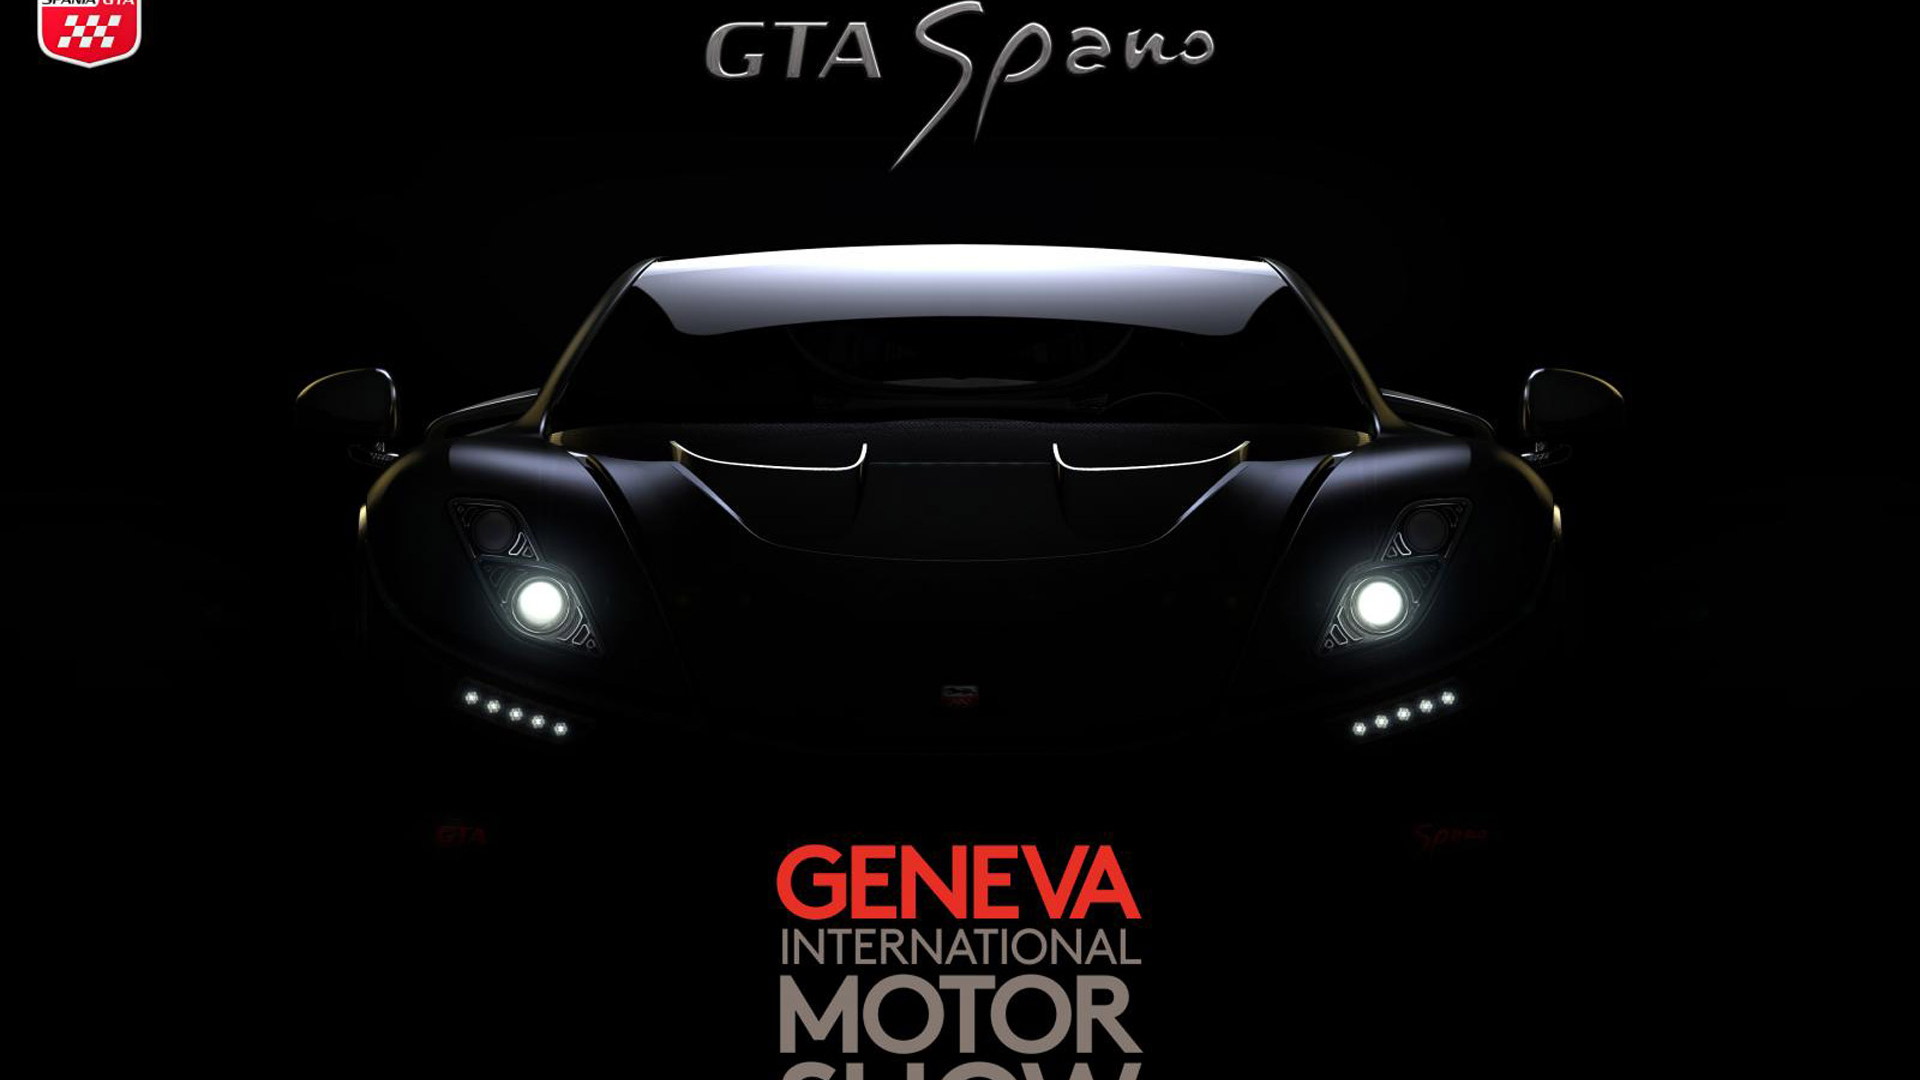 Teaser for 2015 GTA Spano debuting at 2015 Geneva Motor Show